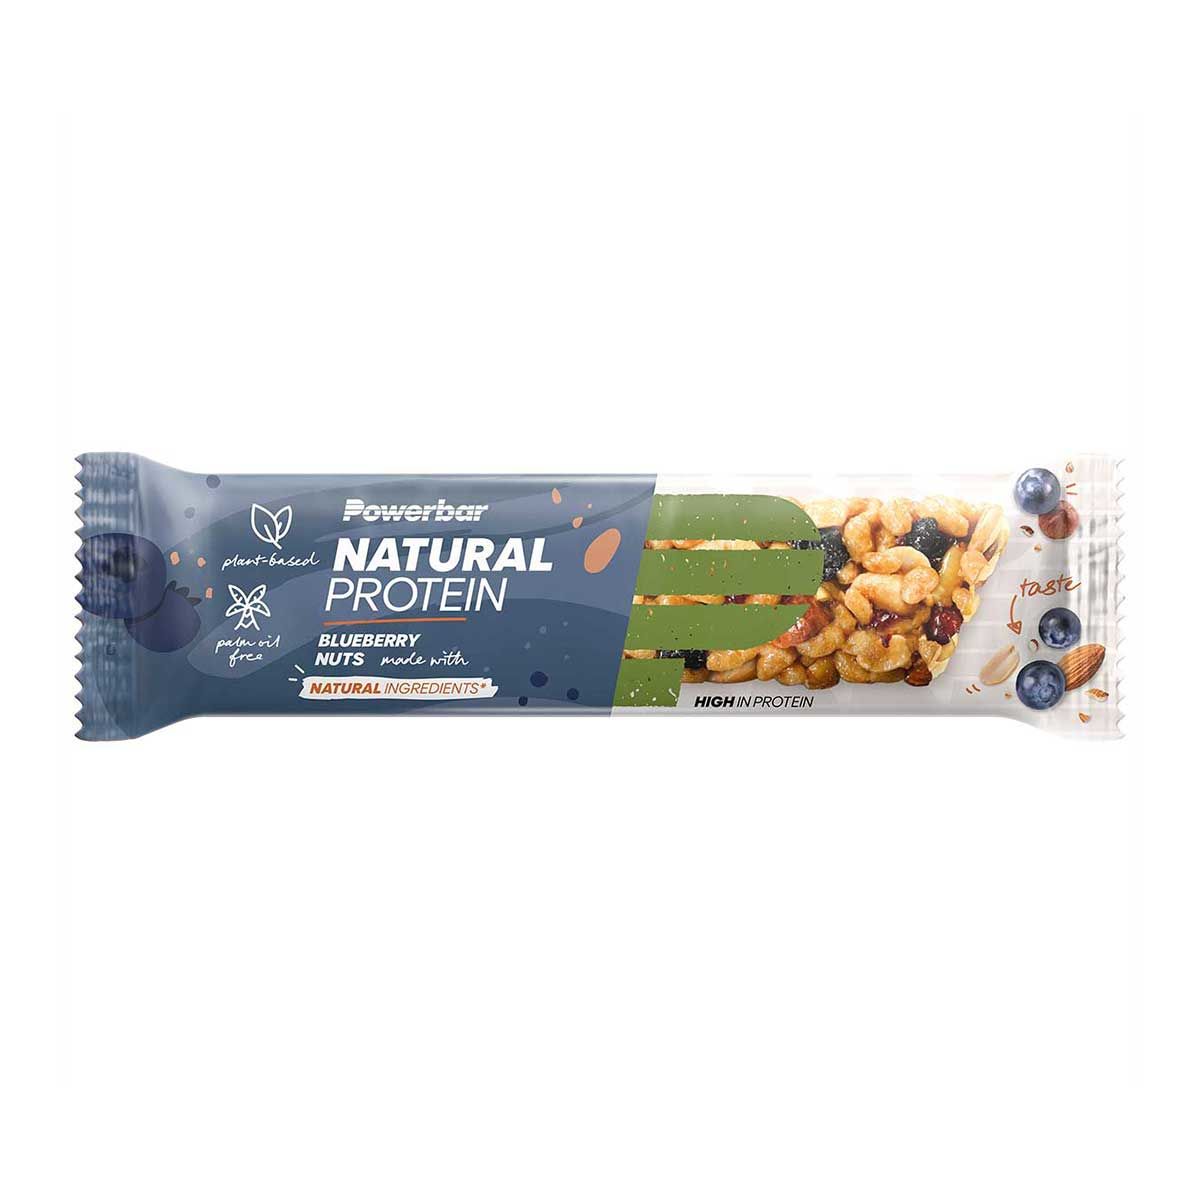 Powerbar Natural Protein bar - Blueberry